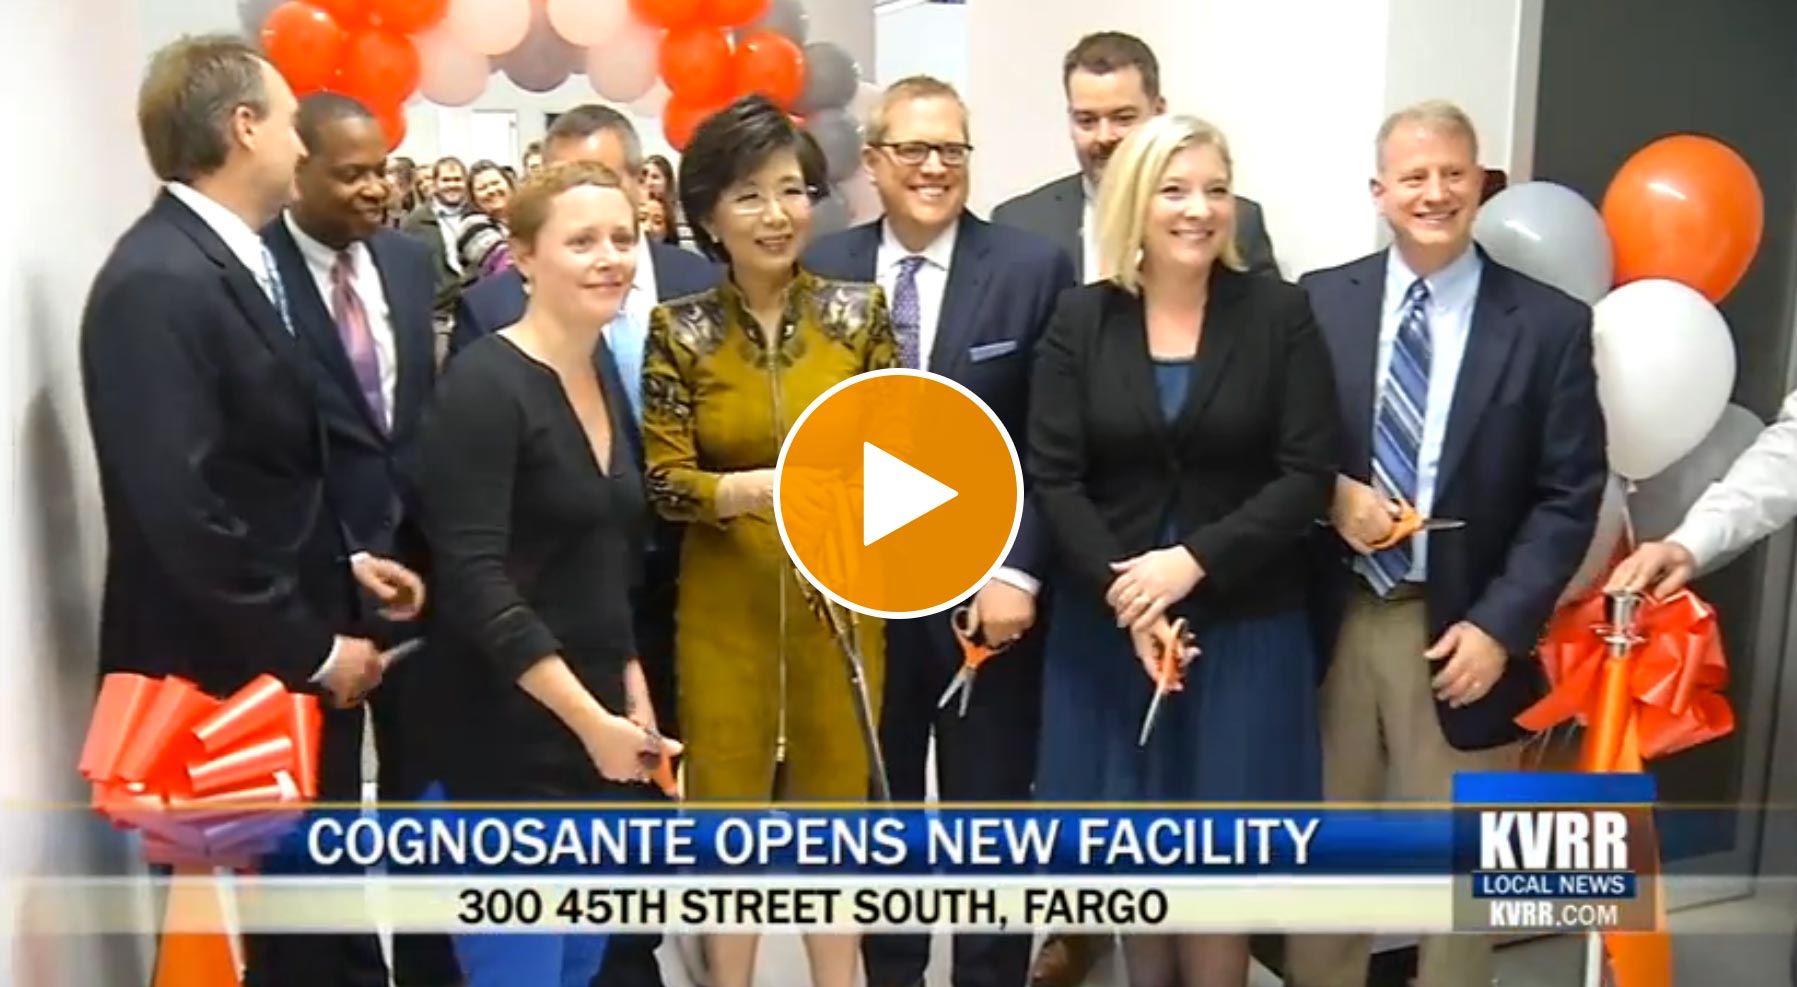 Cognosante Celebrates Opening of New Facility